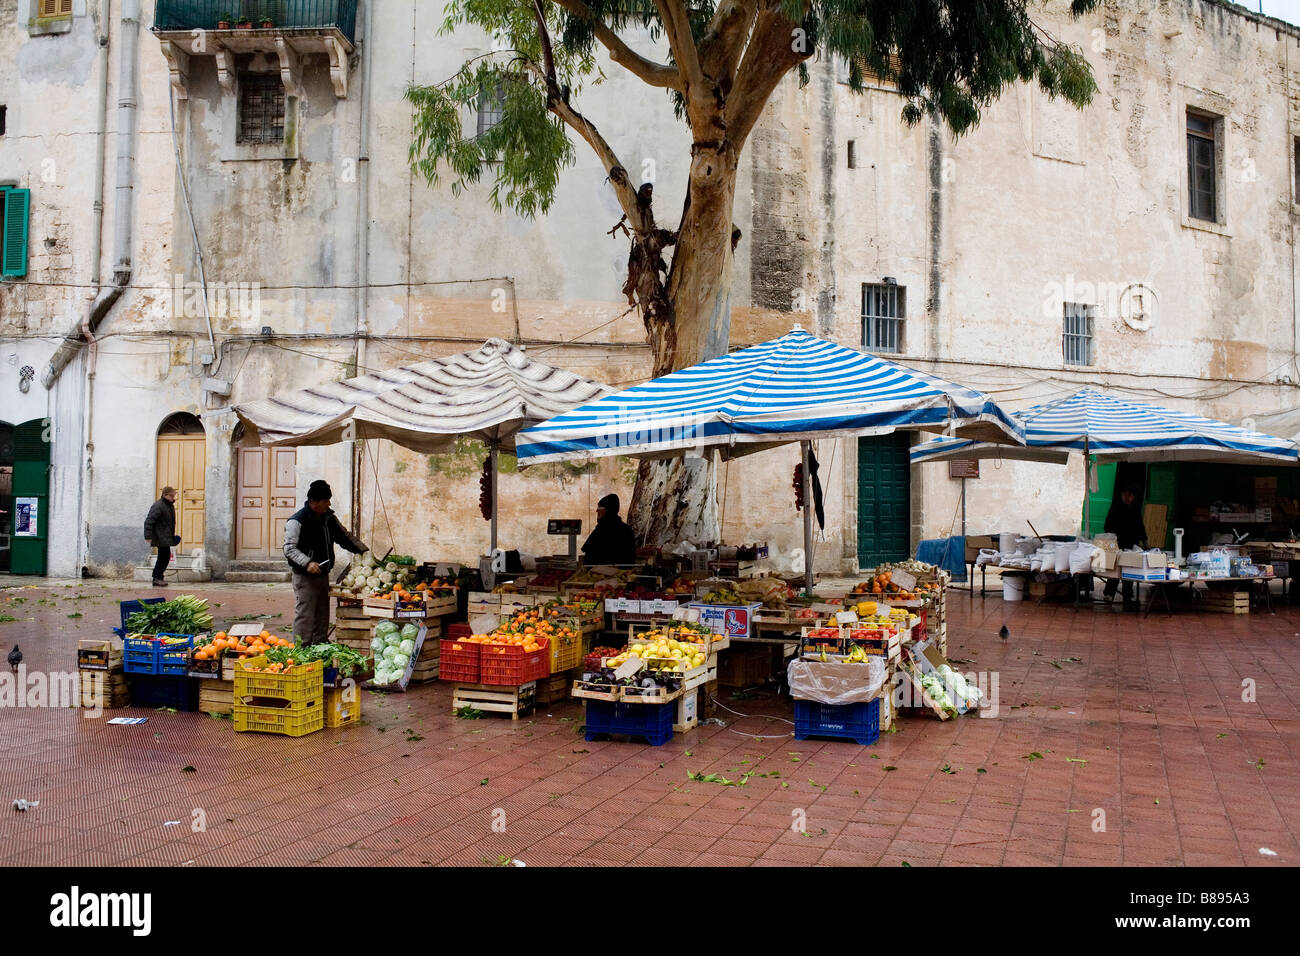 Market stalls in Monopoli, southern Italy. Stock Photo